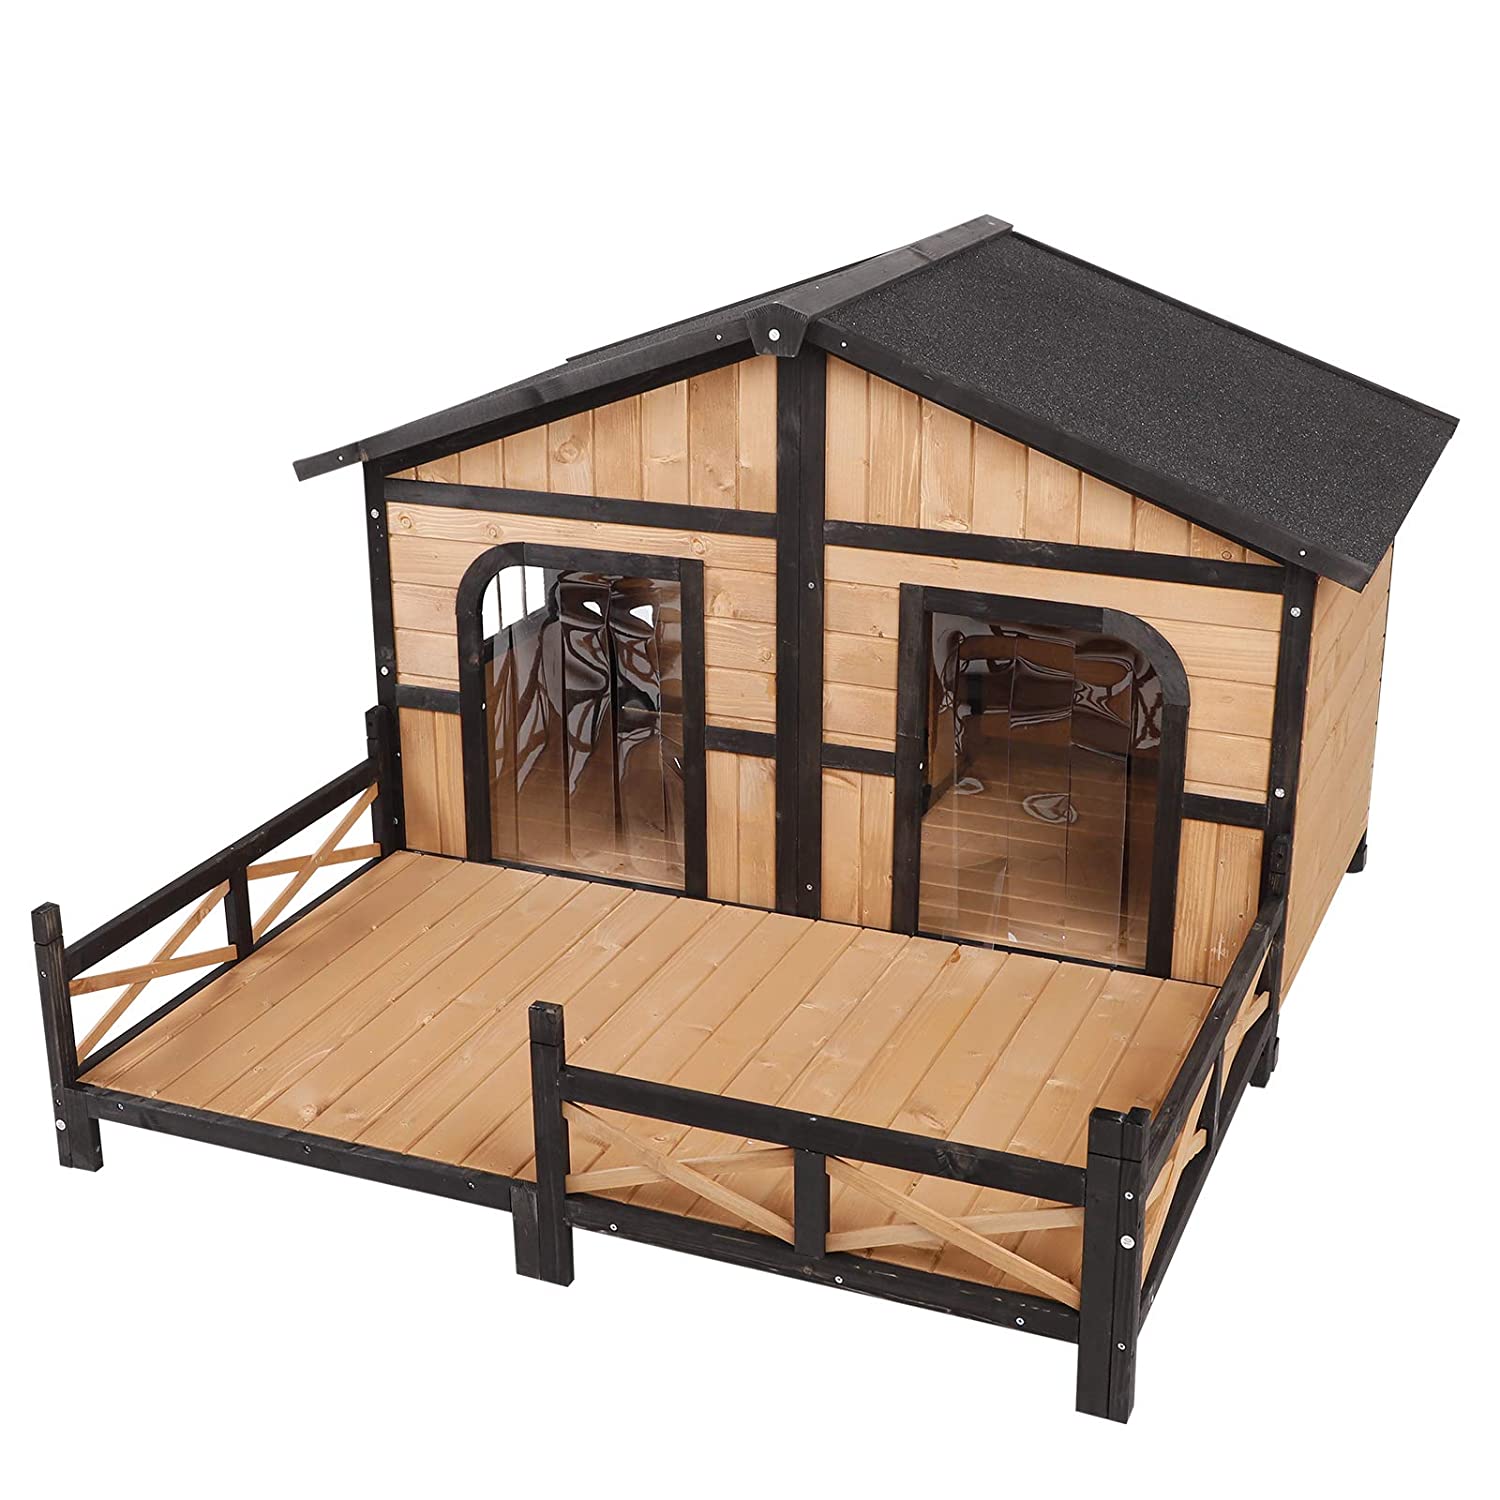 PawHut Large Wooden Weatherproof Cabin Style Dog House